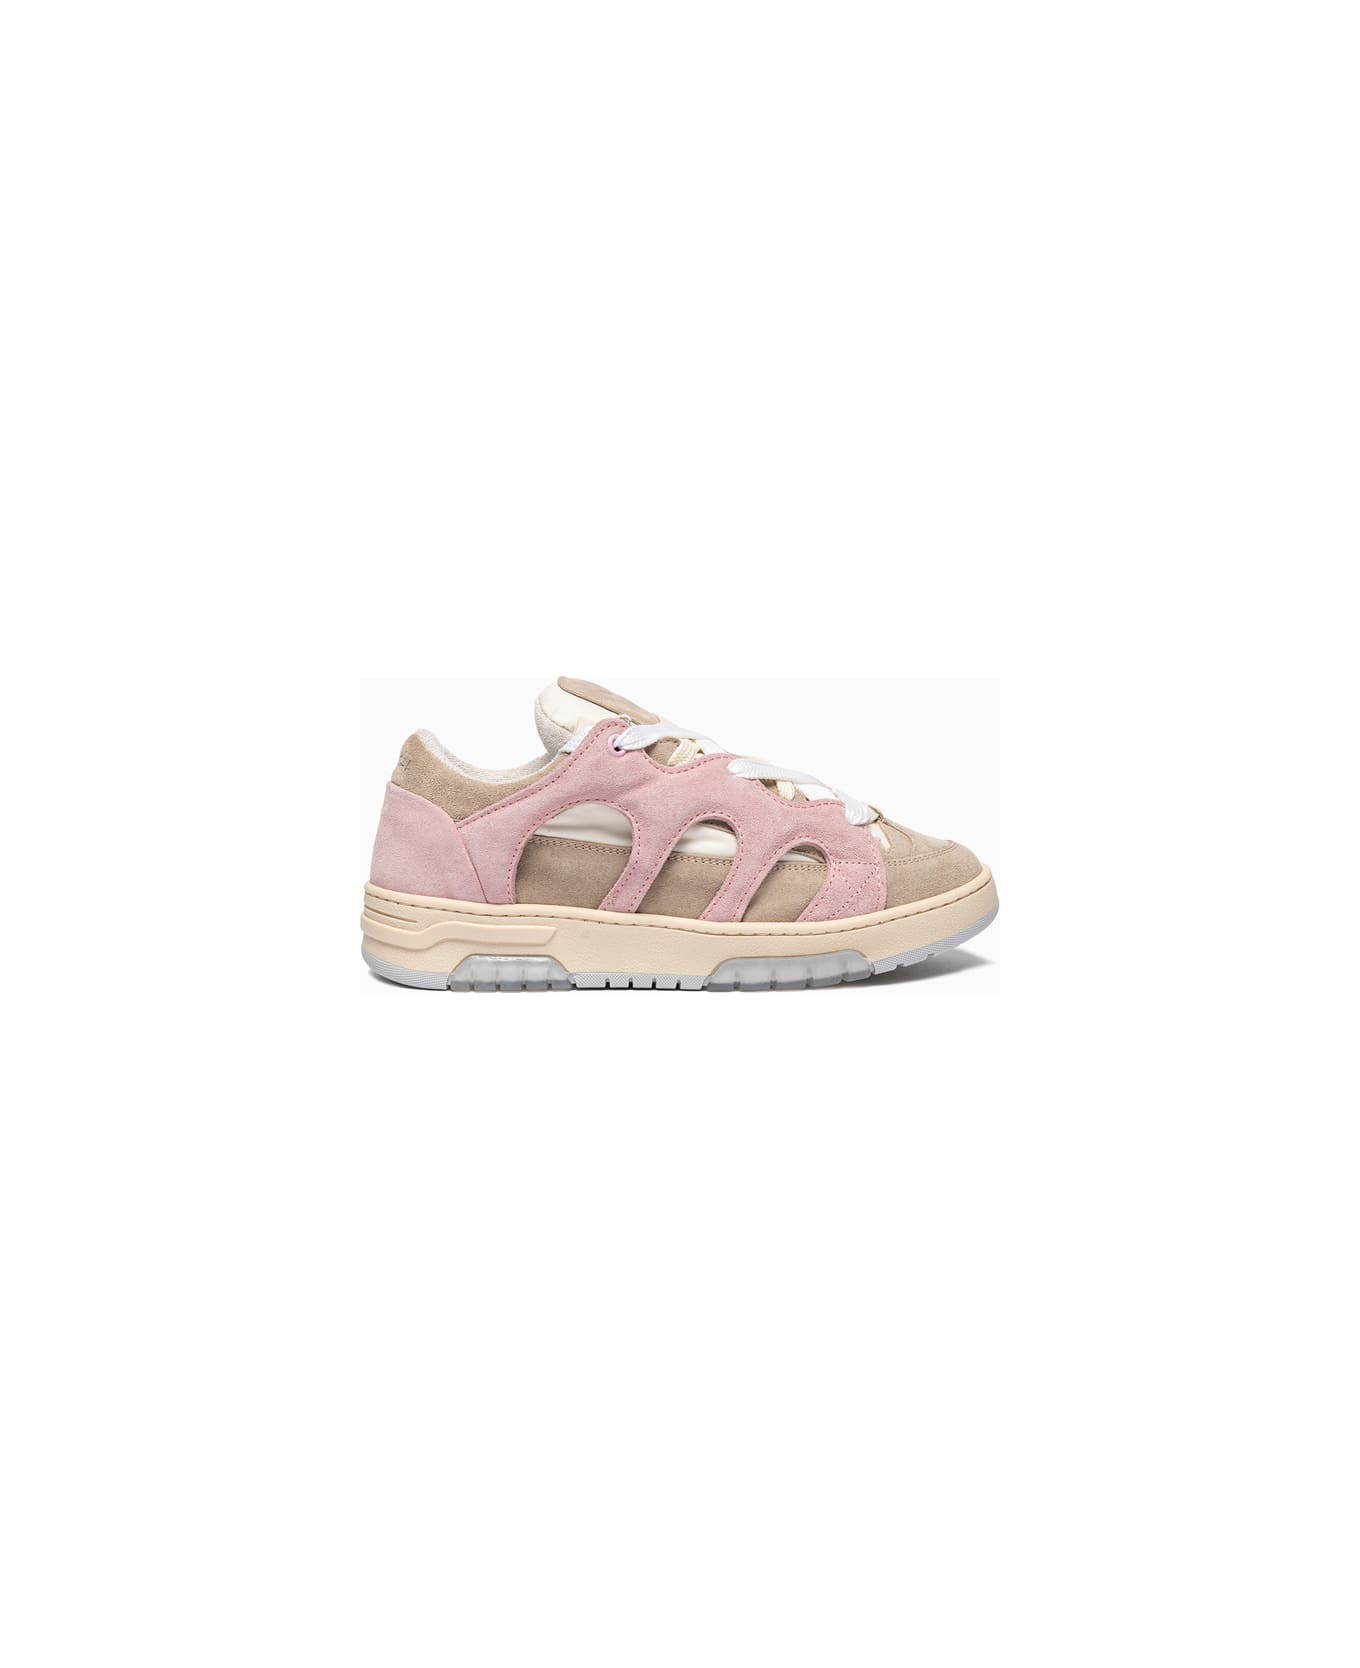 Paura Santha Sneakers - Pink/dove